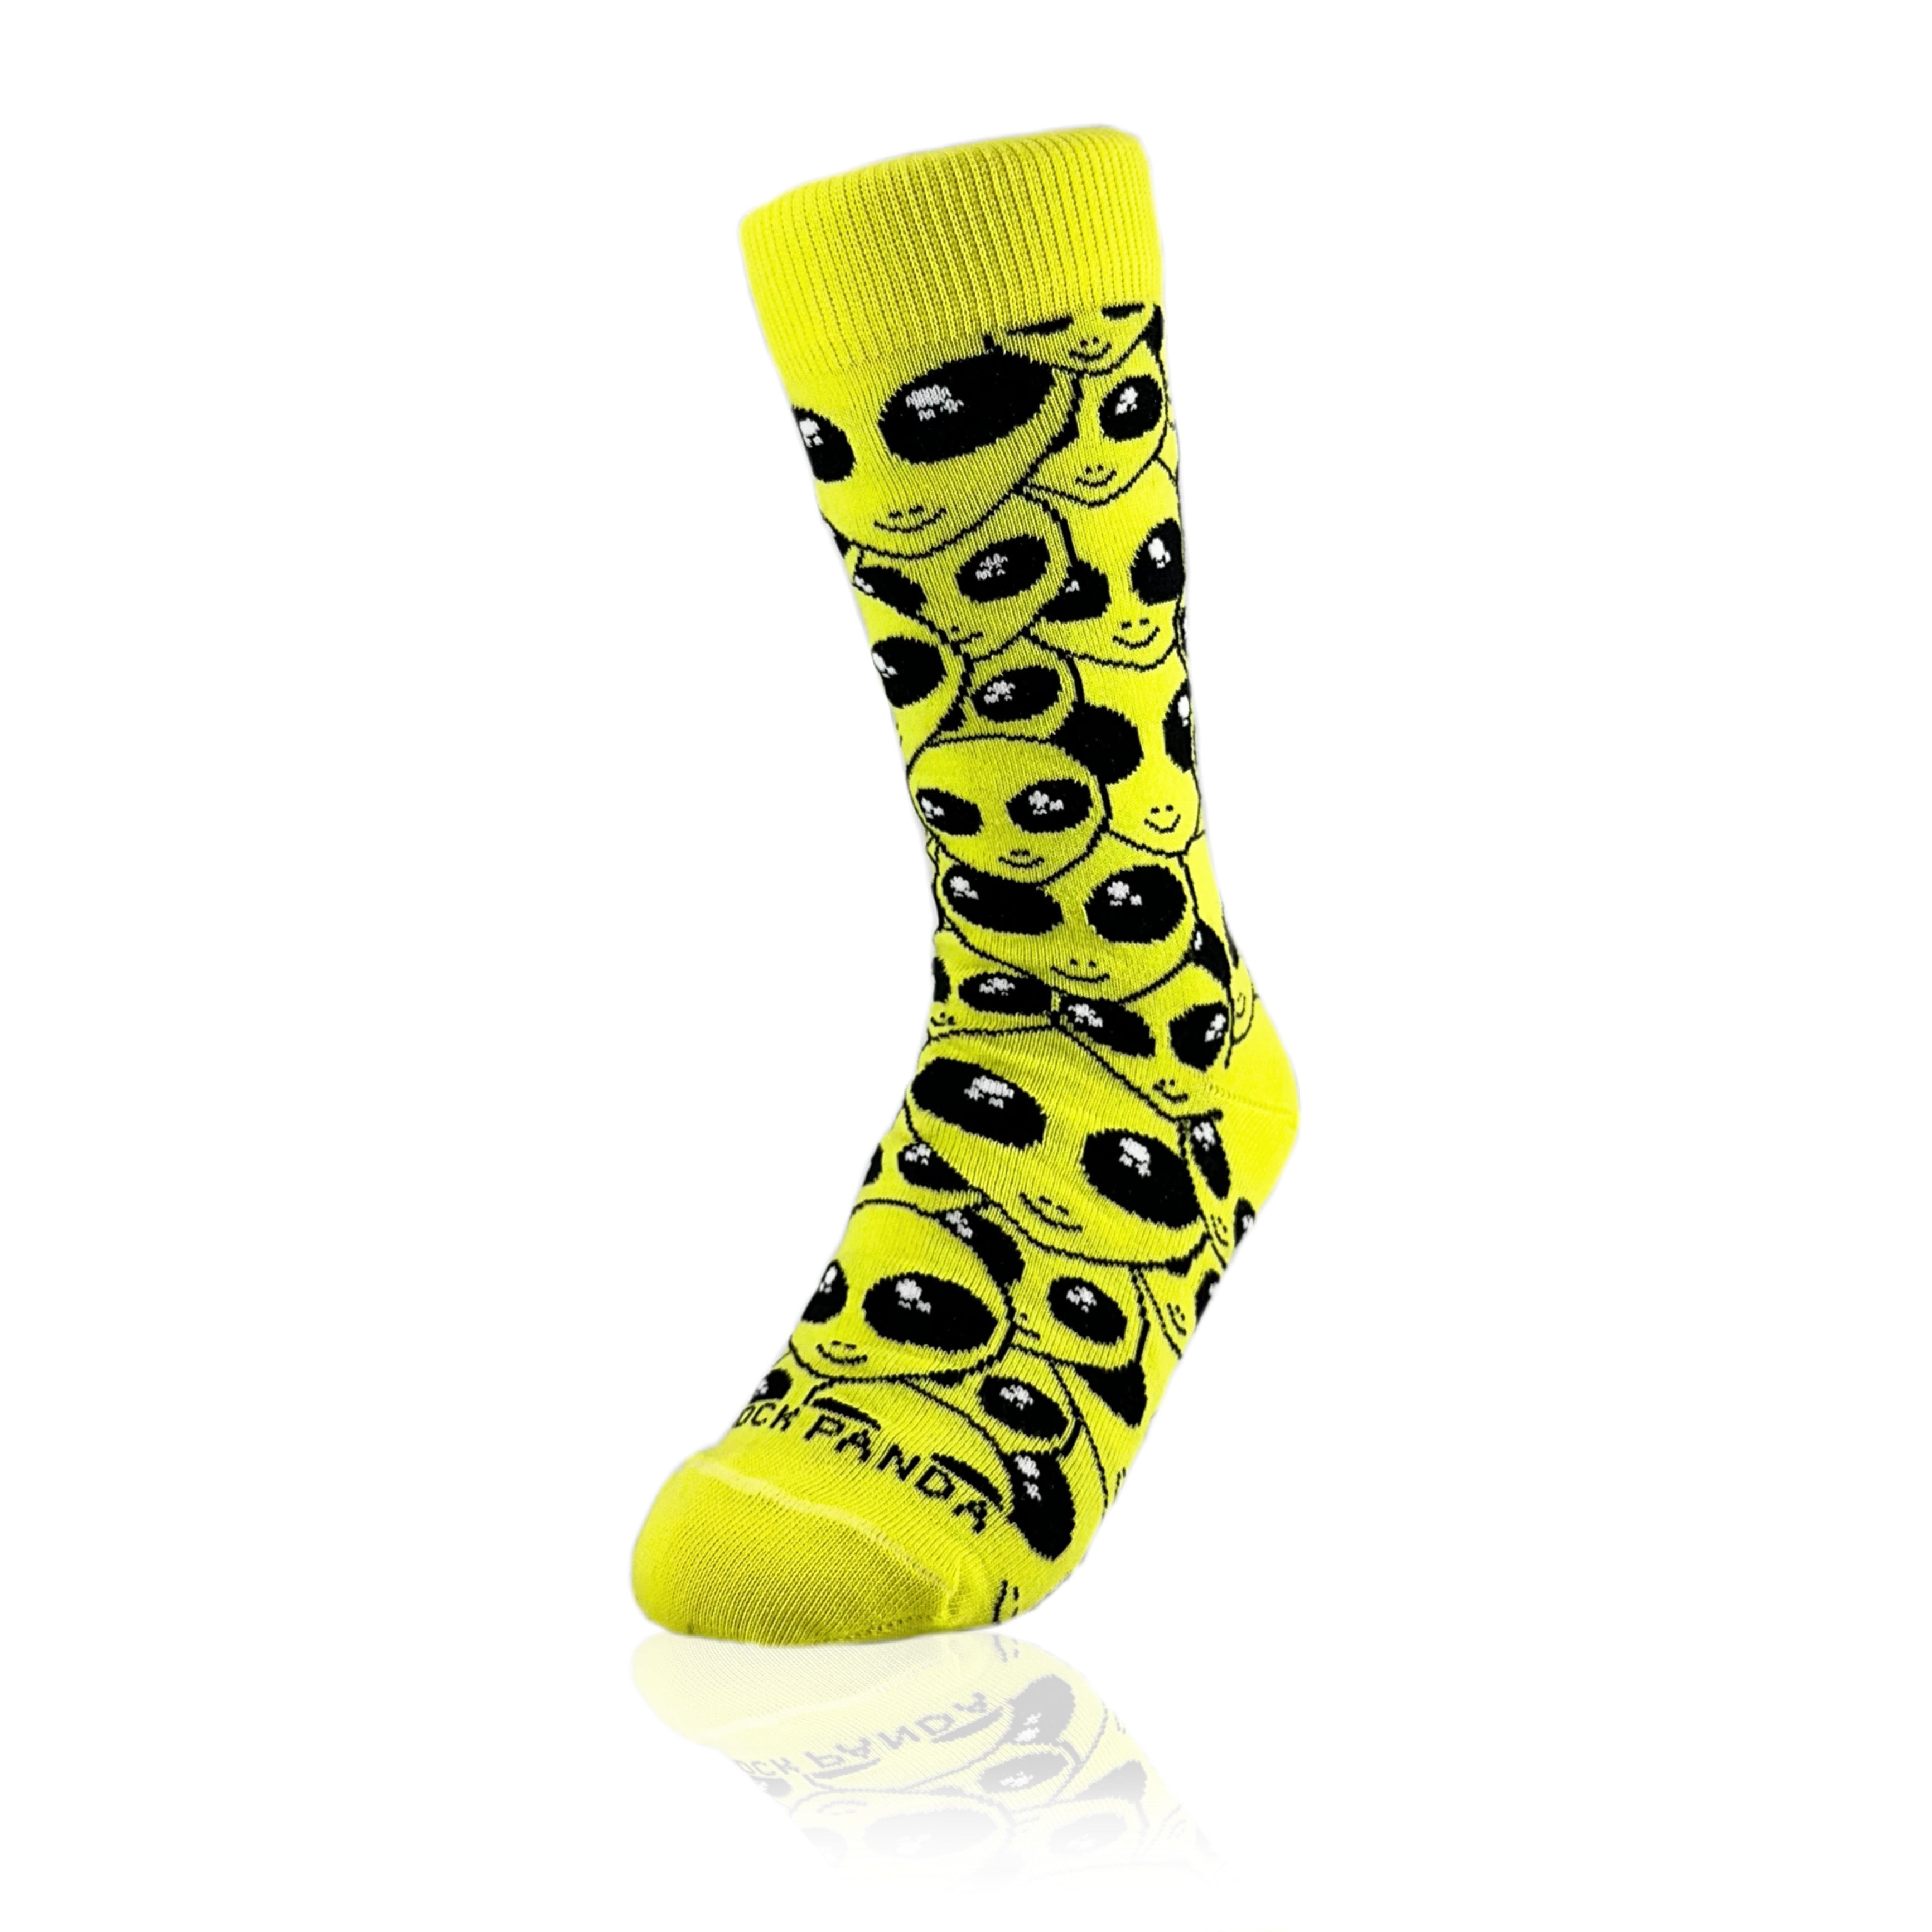 Alien Face Pattern Socks from the Sock Panda (Adult Small)